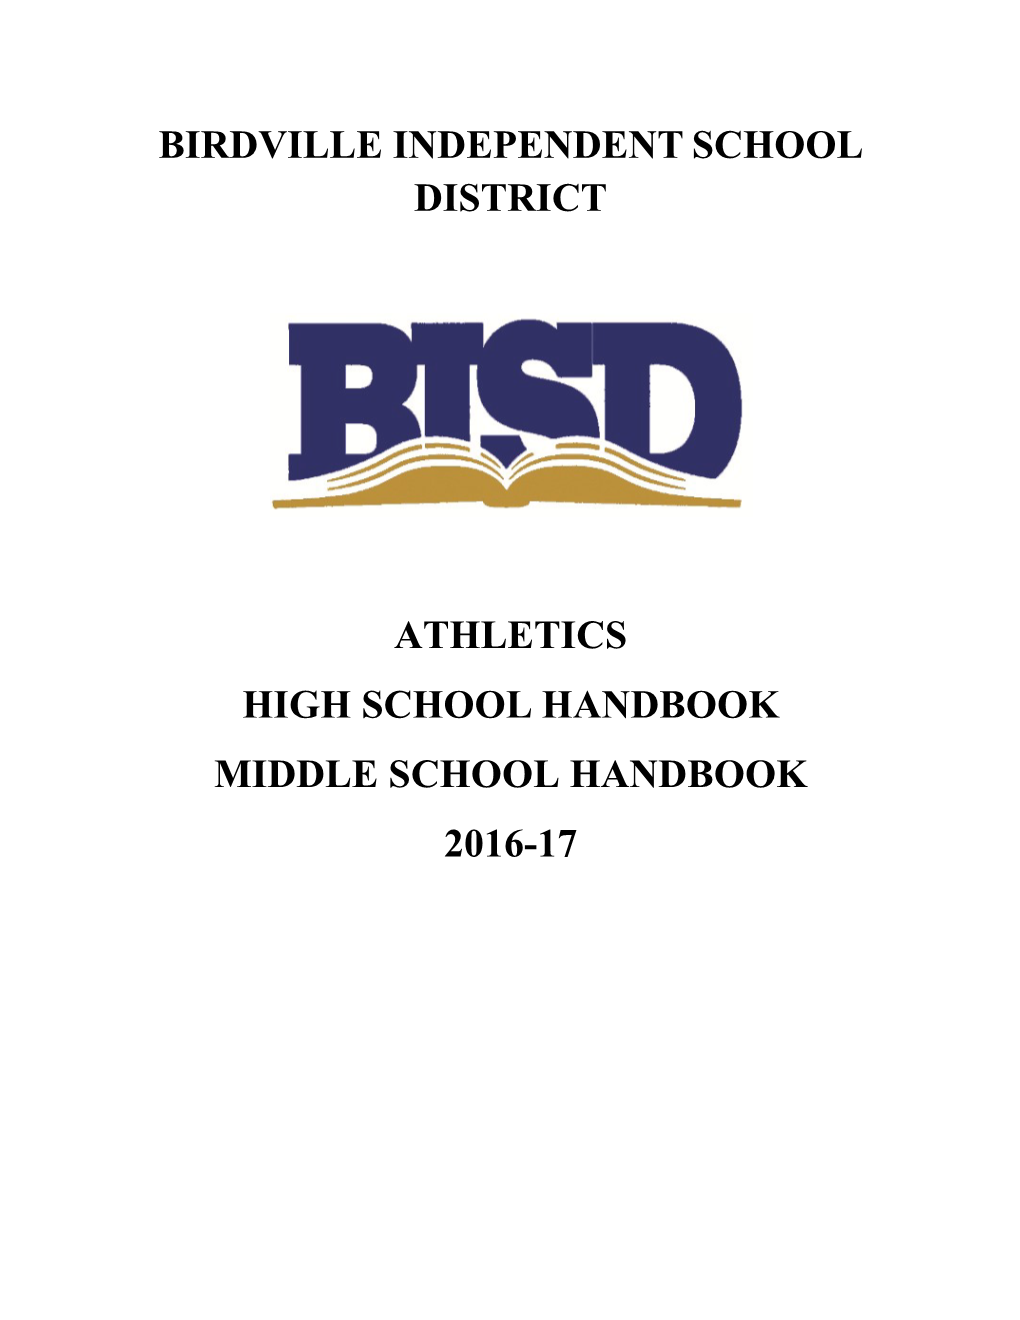 Birdville Independent School District Athletics High School Handbook